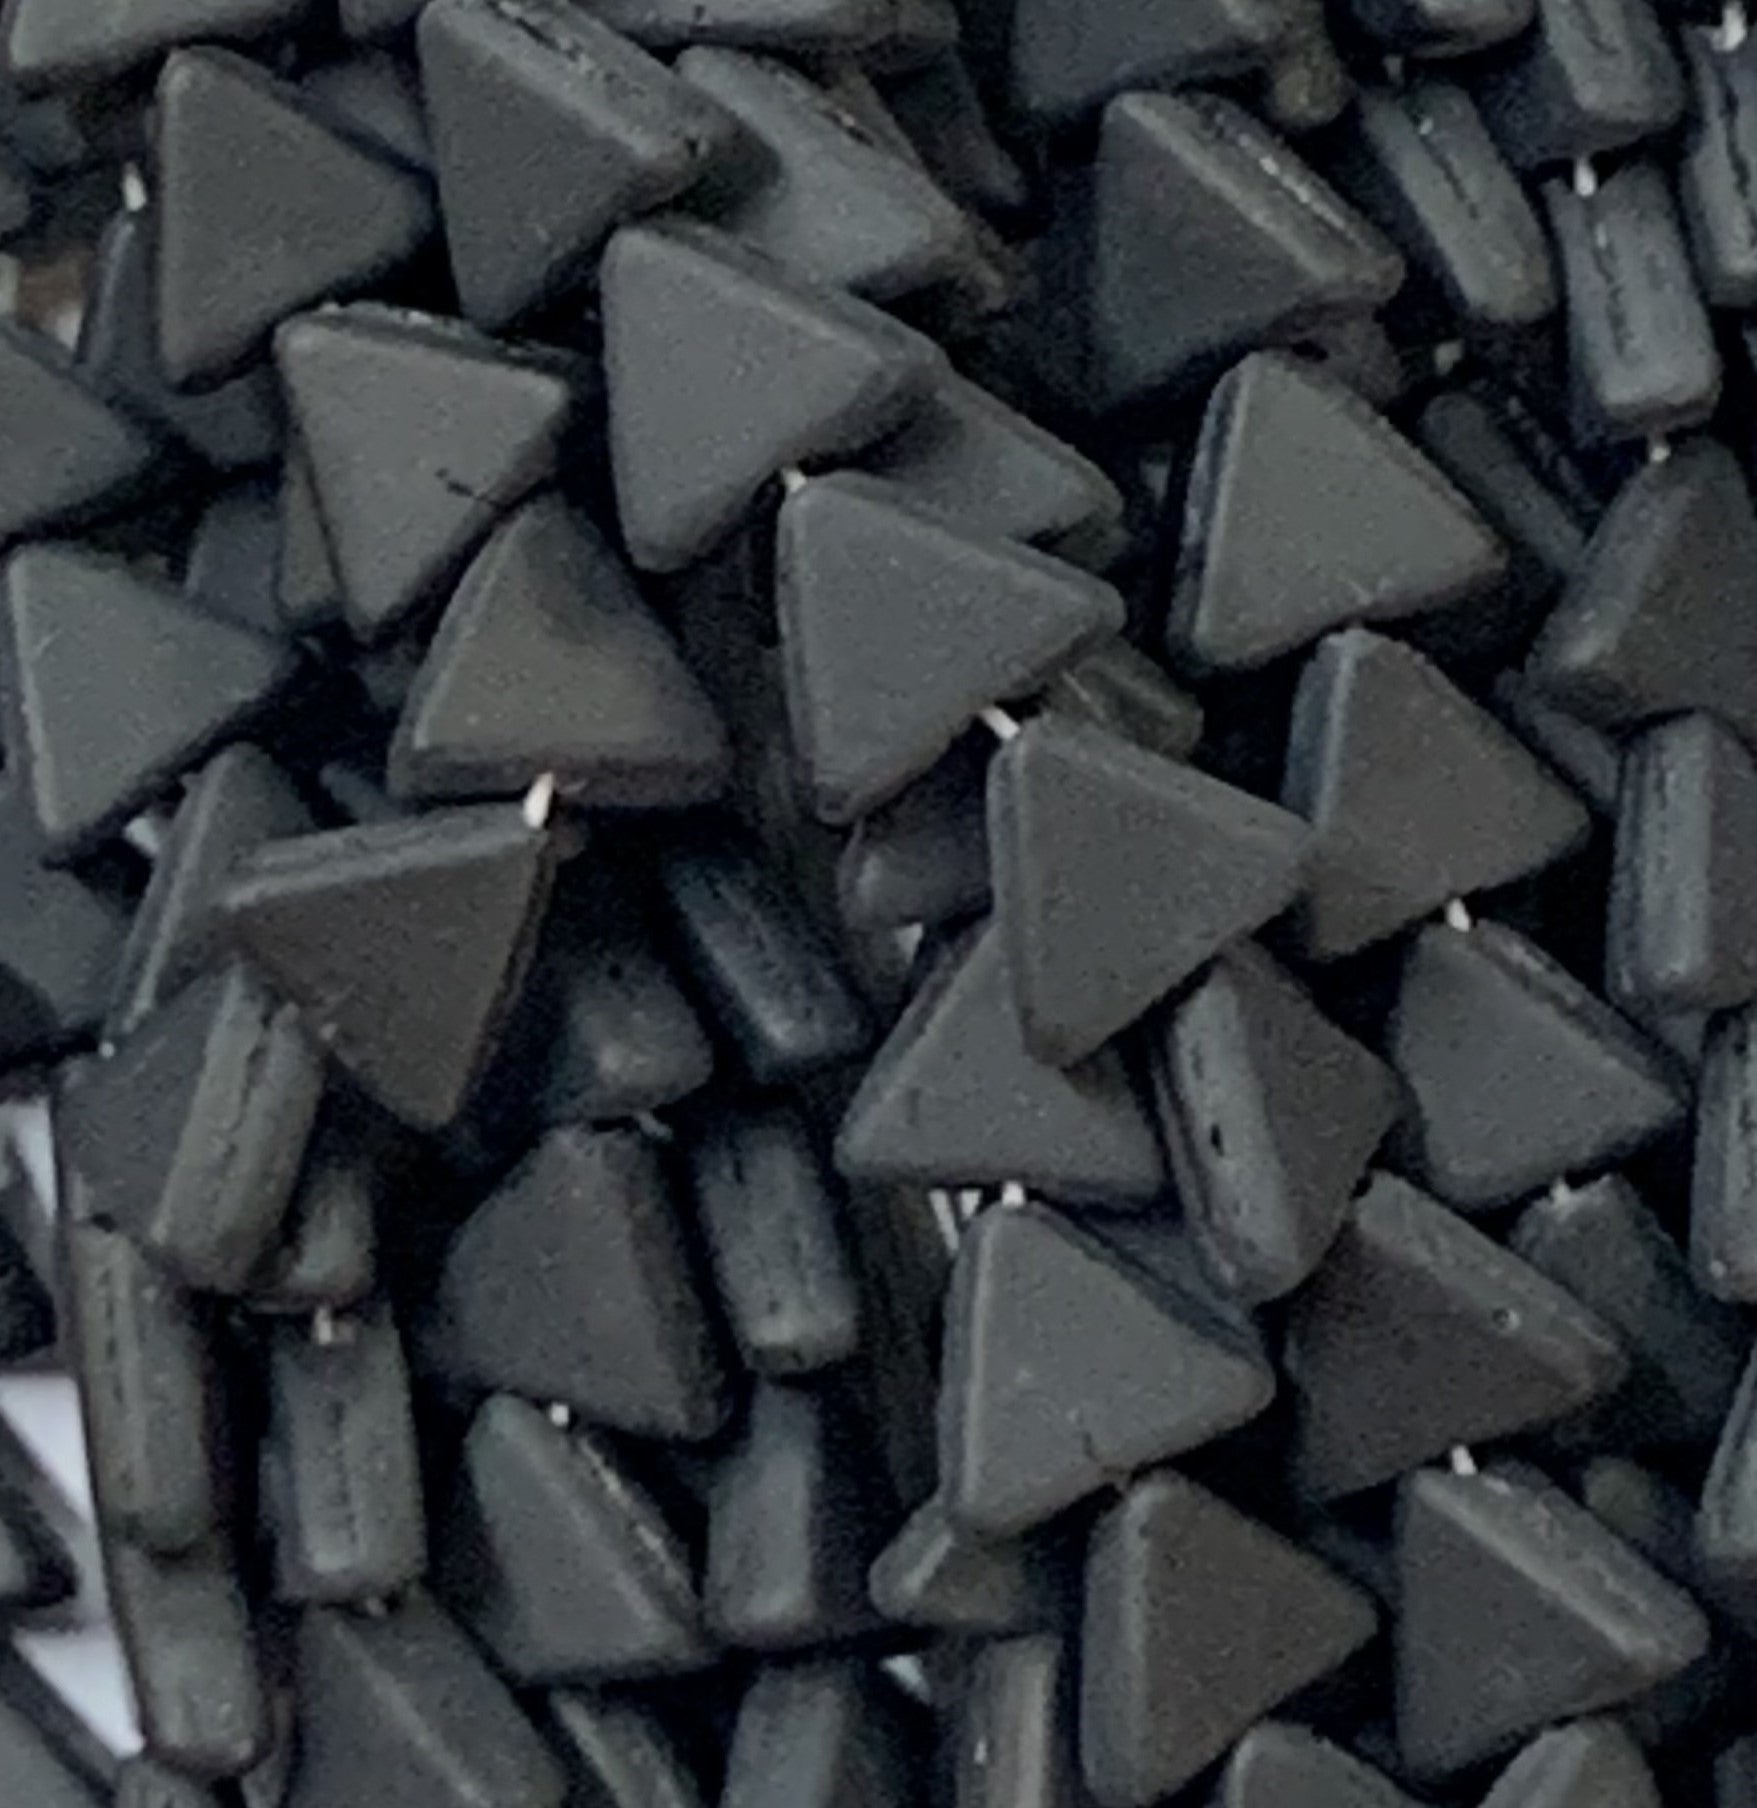 6mm Black Matte Triangles